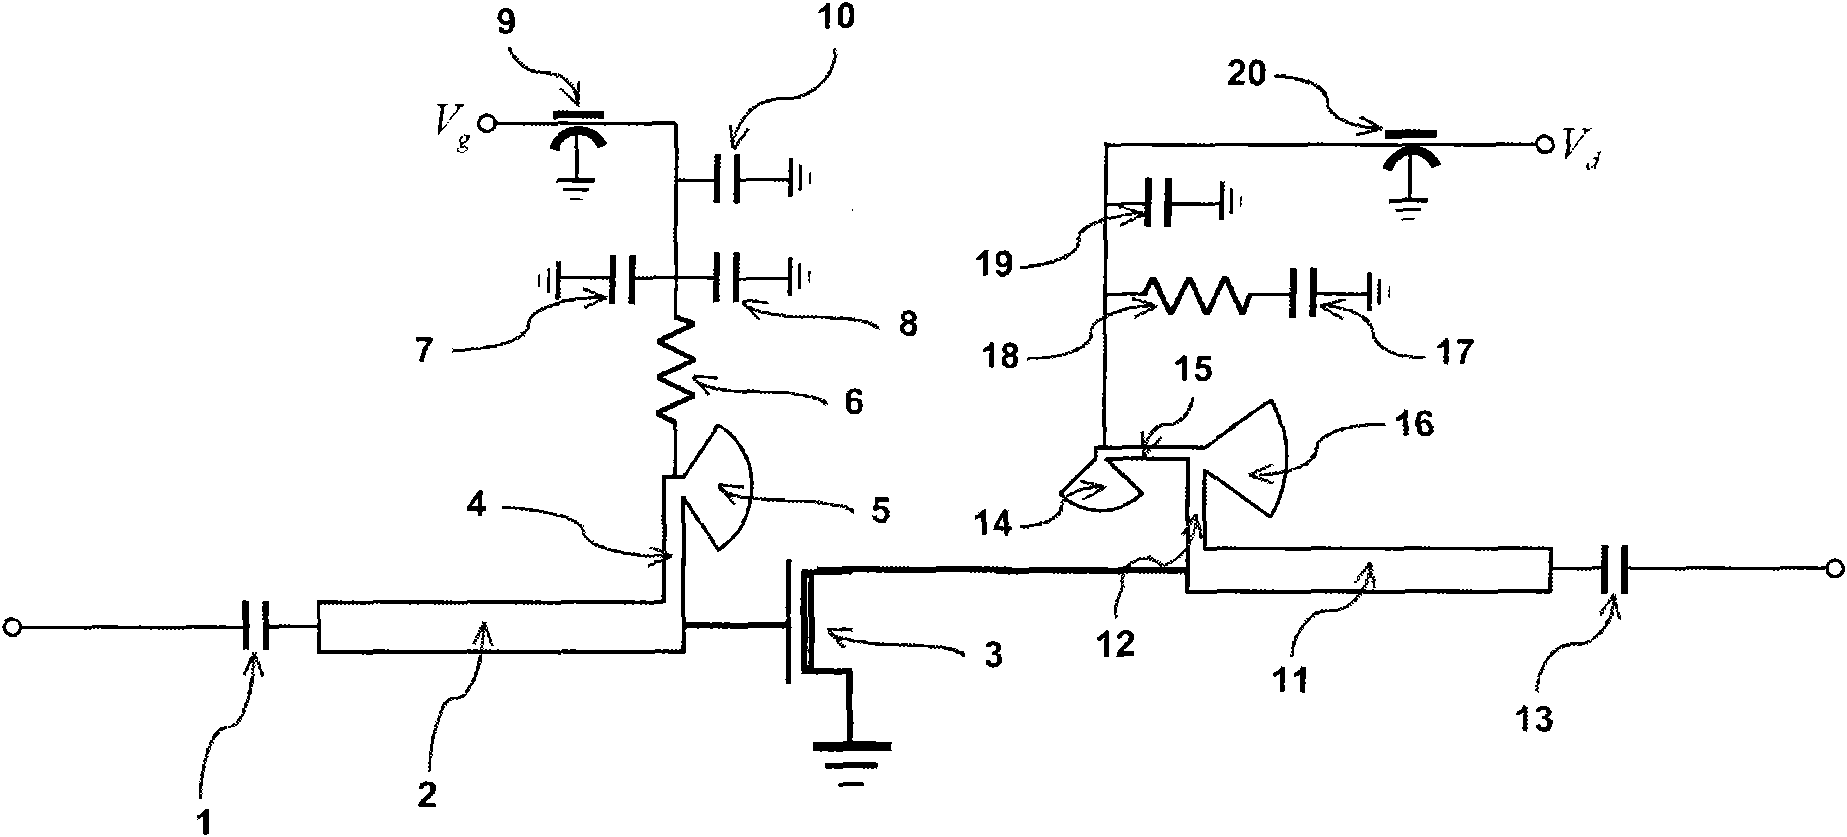 Bias circuit used in Ku waveband internally-matched field effect transistor